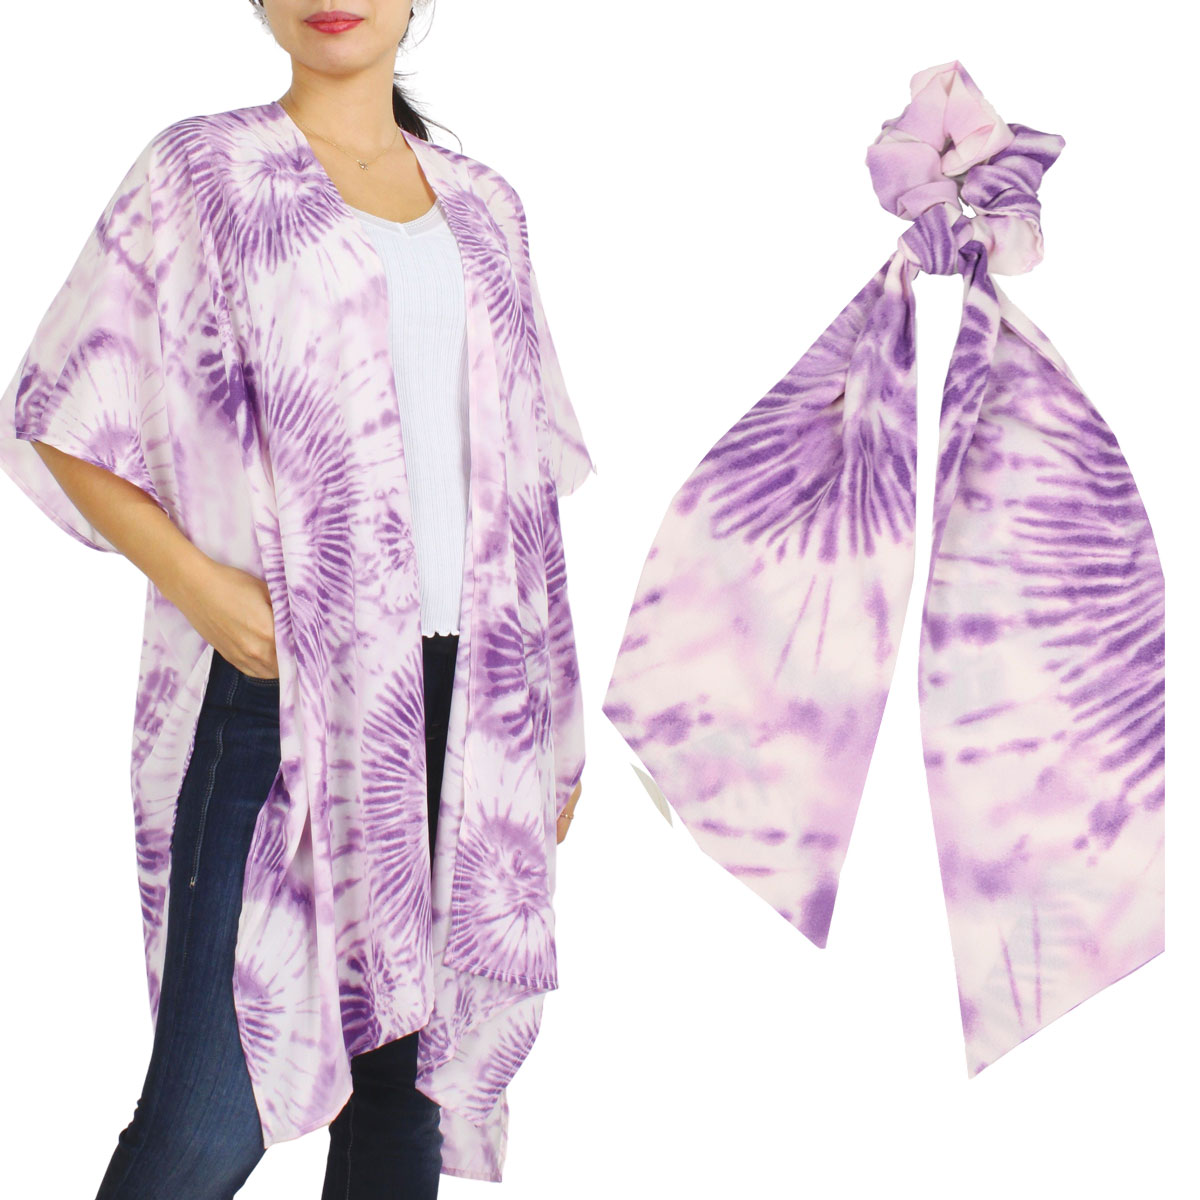 SET 9923 - Pink <br> 
Tie Dye Kimono with Matching Hair Tie